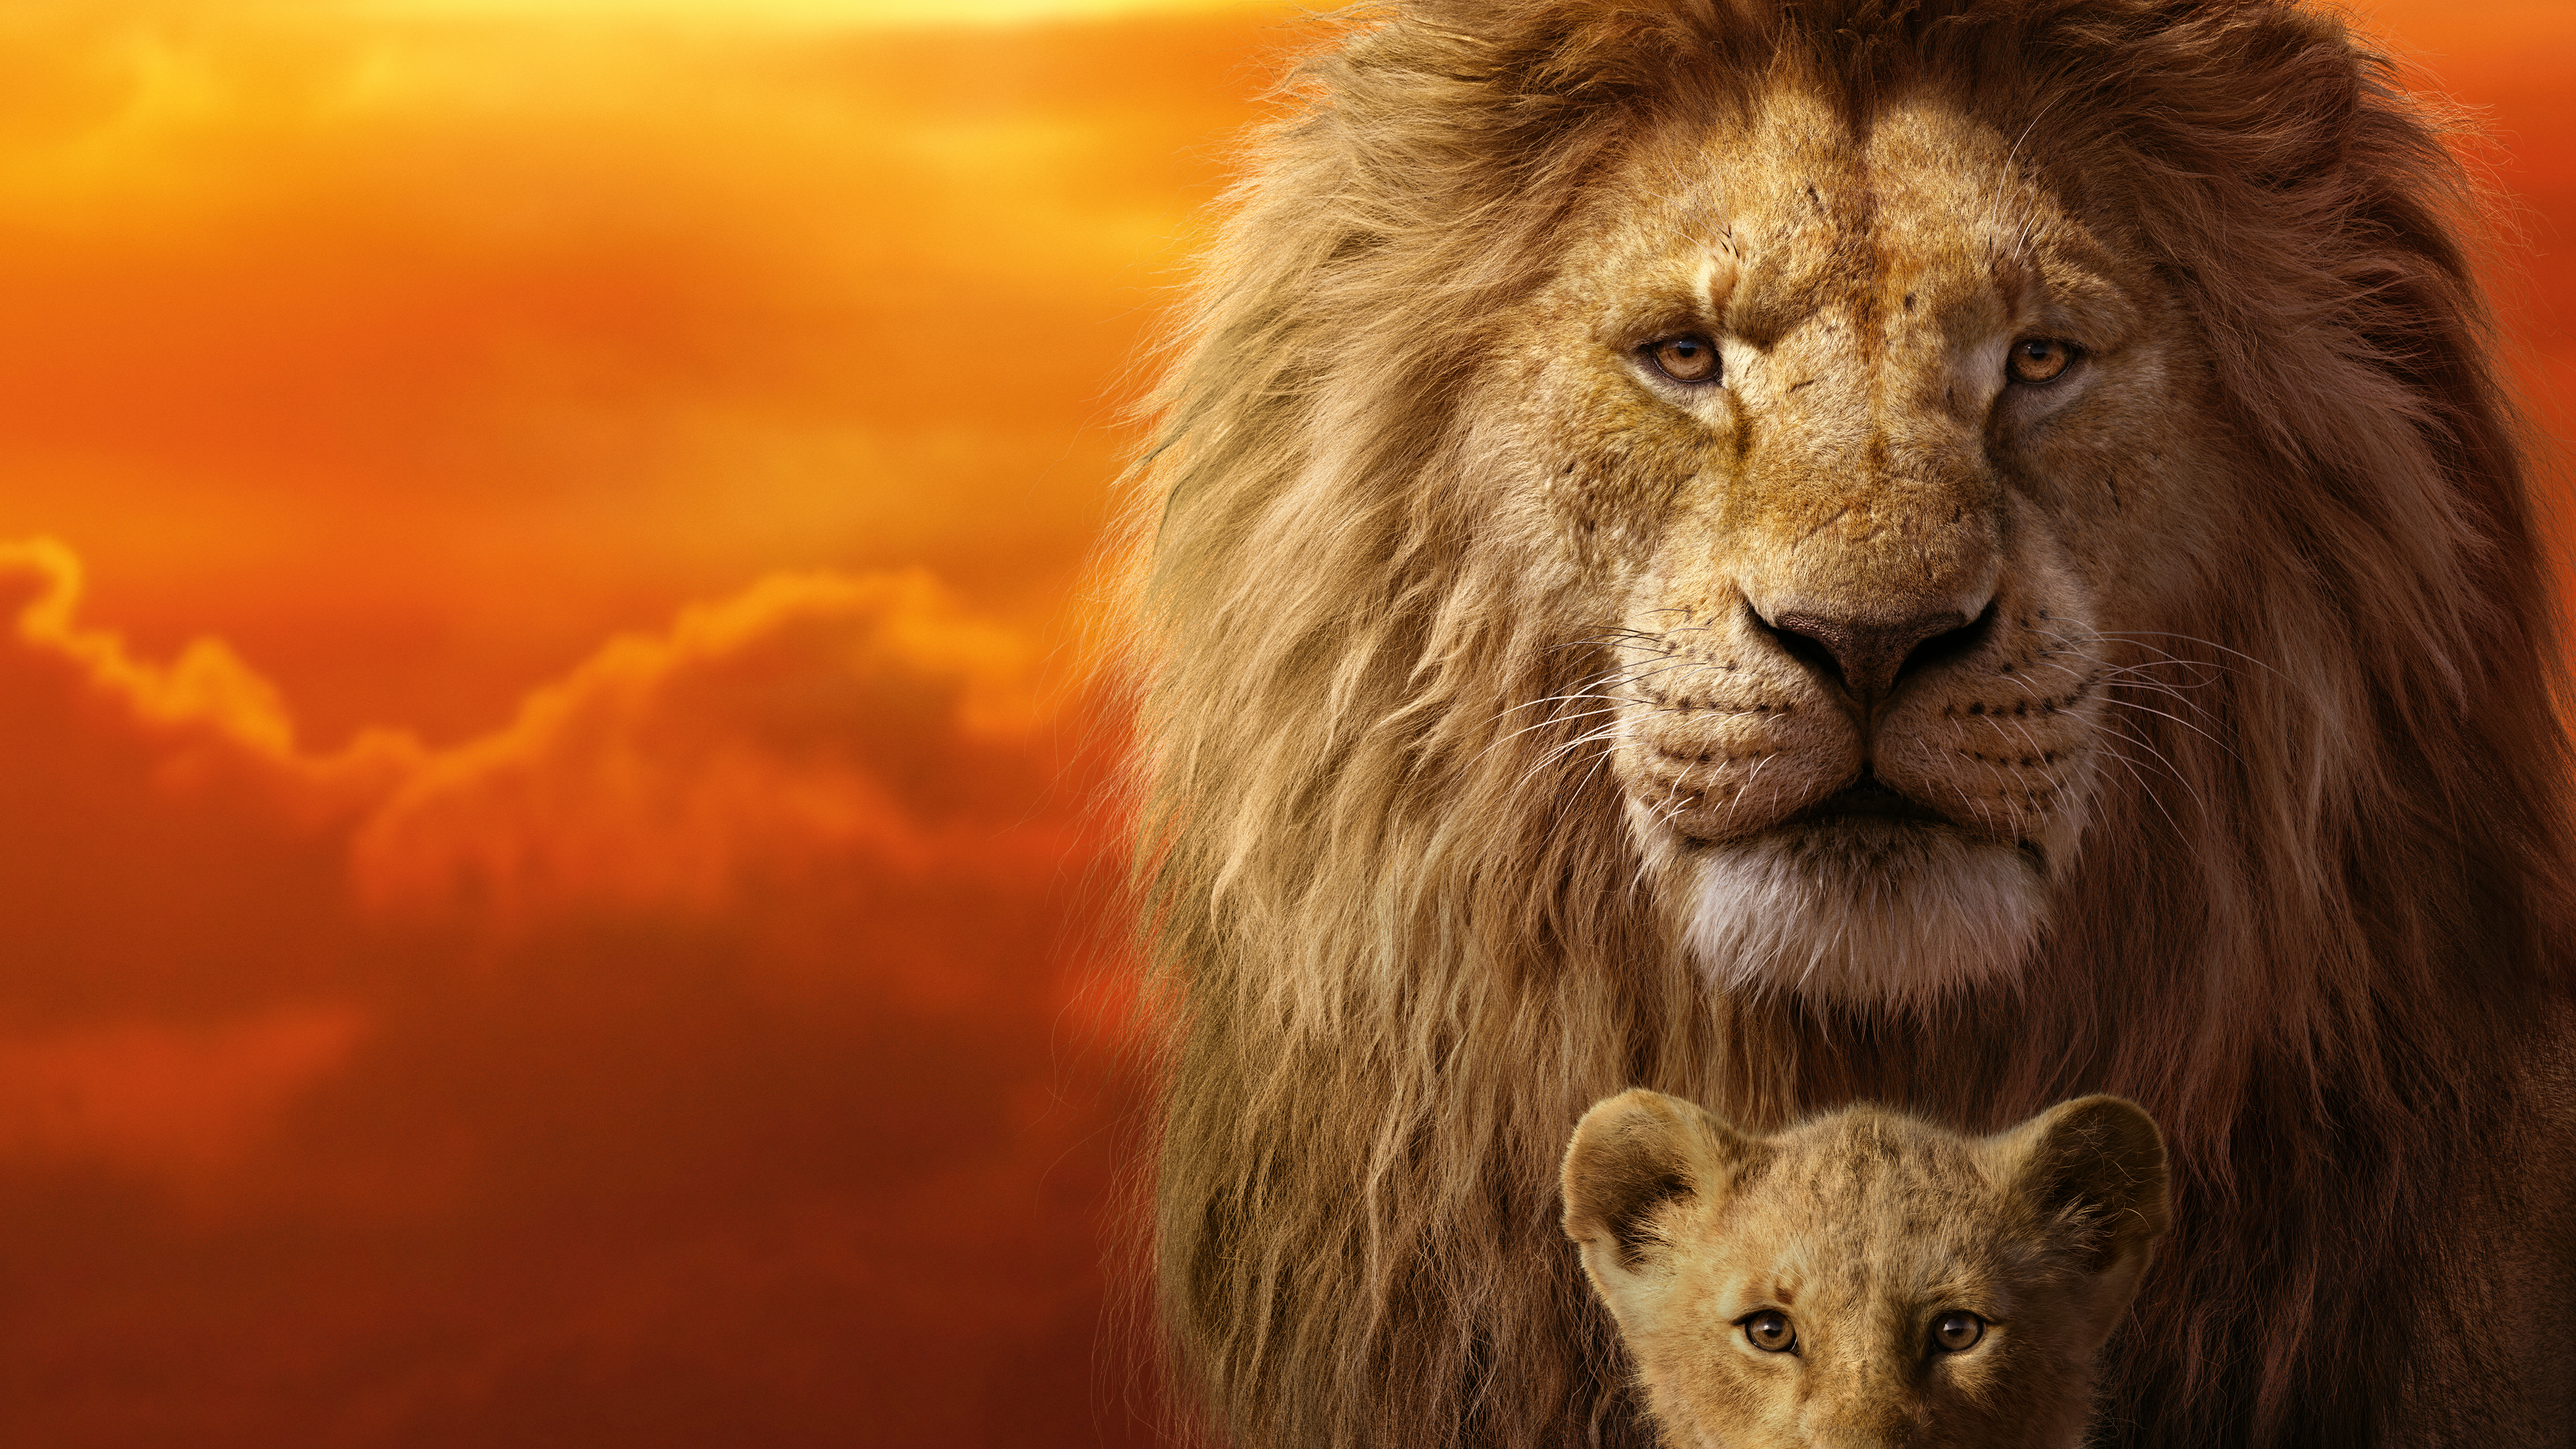 Movie The Lion King (2019) 4k Ultra HD Wallpaper